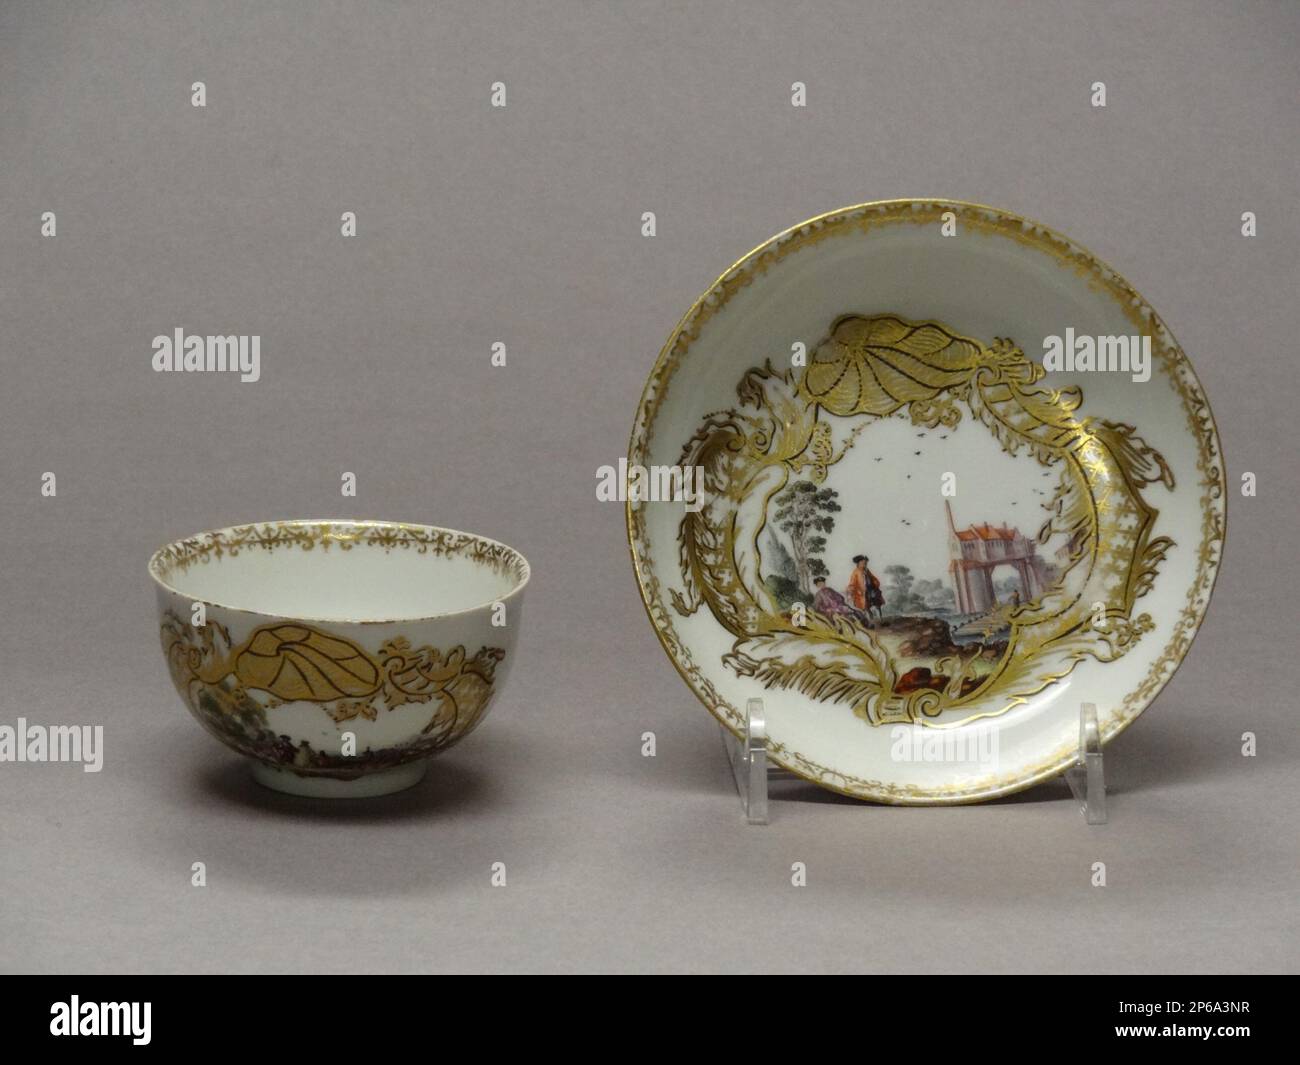 Meissen Porcelain Manufactory, Teabowl and Saucer, c. 1745, hard-paste porcelain. Stock Photo